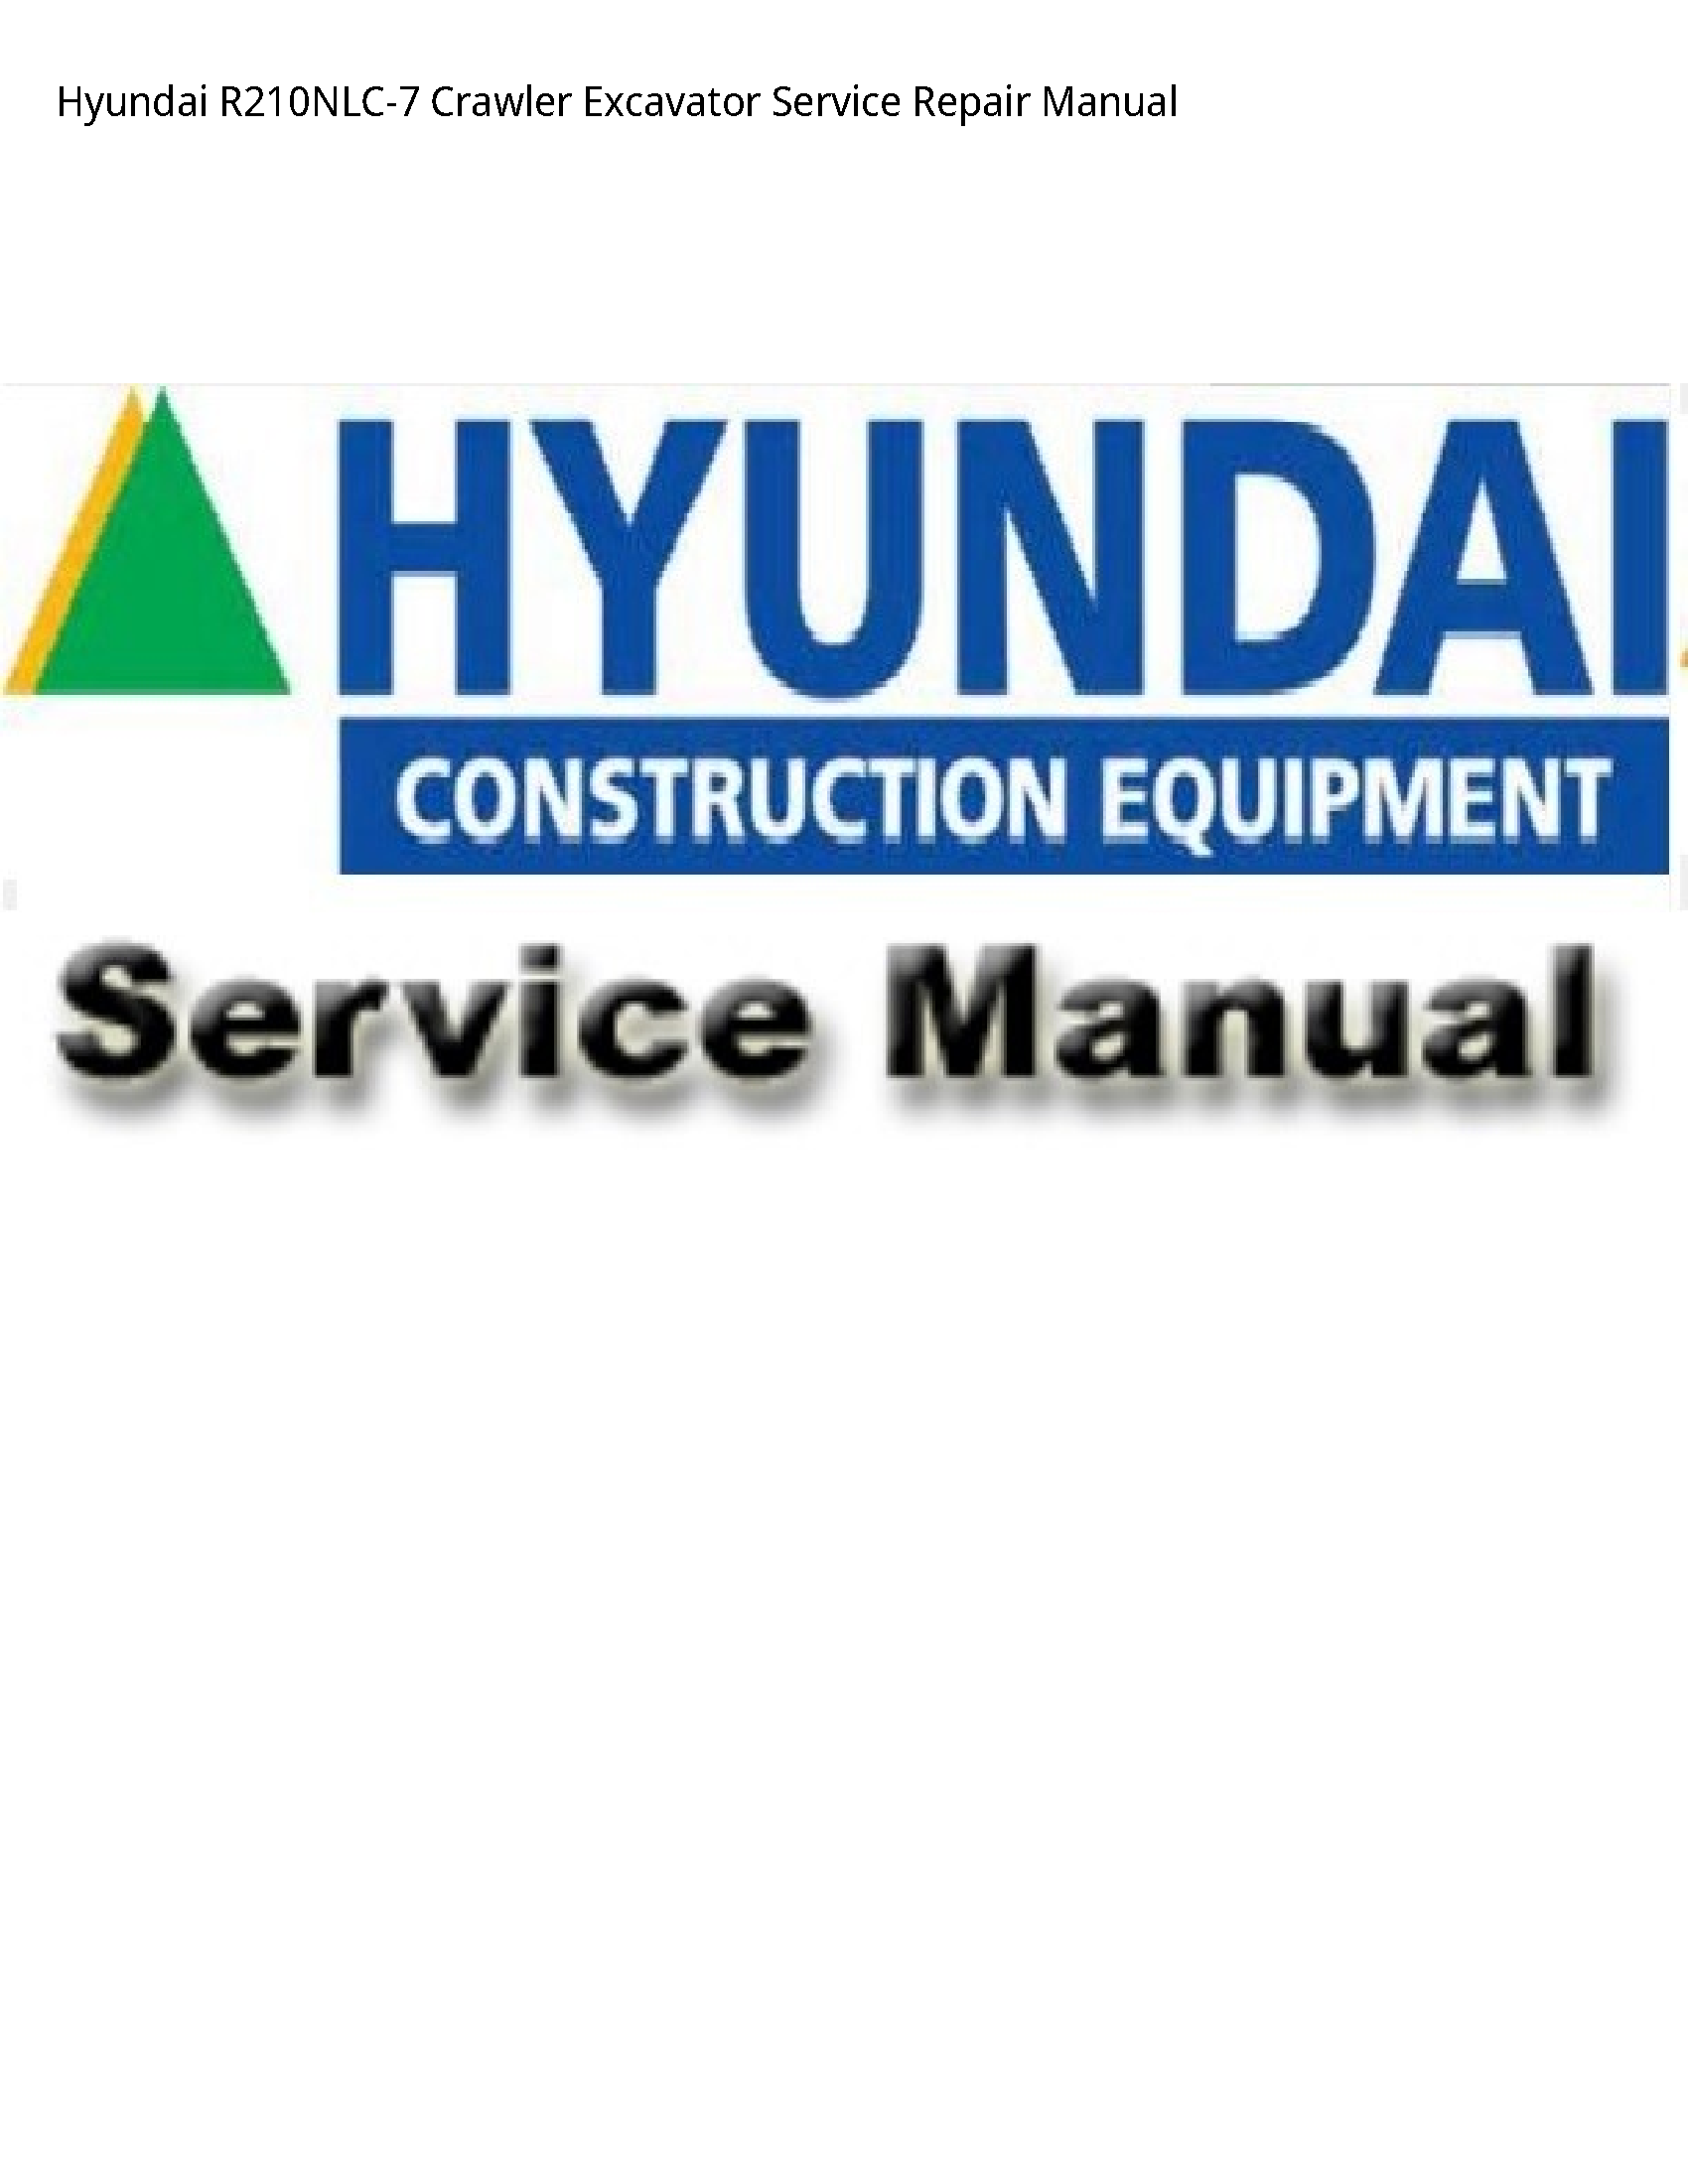 Hyundai R210NLC-7 Crawler Excavator manual